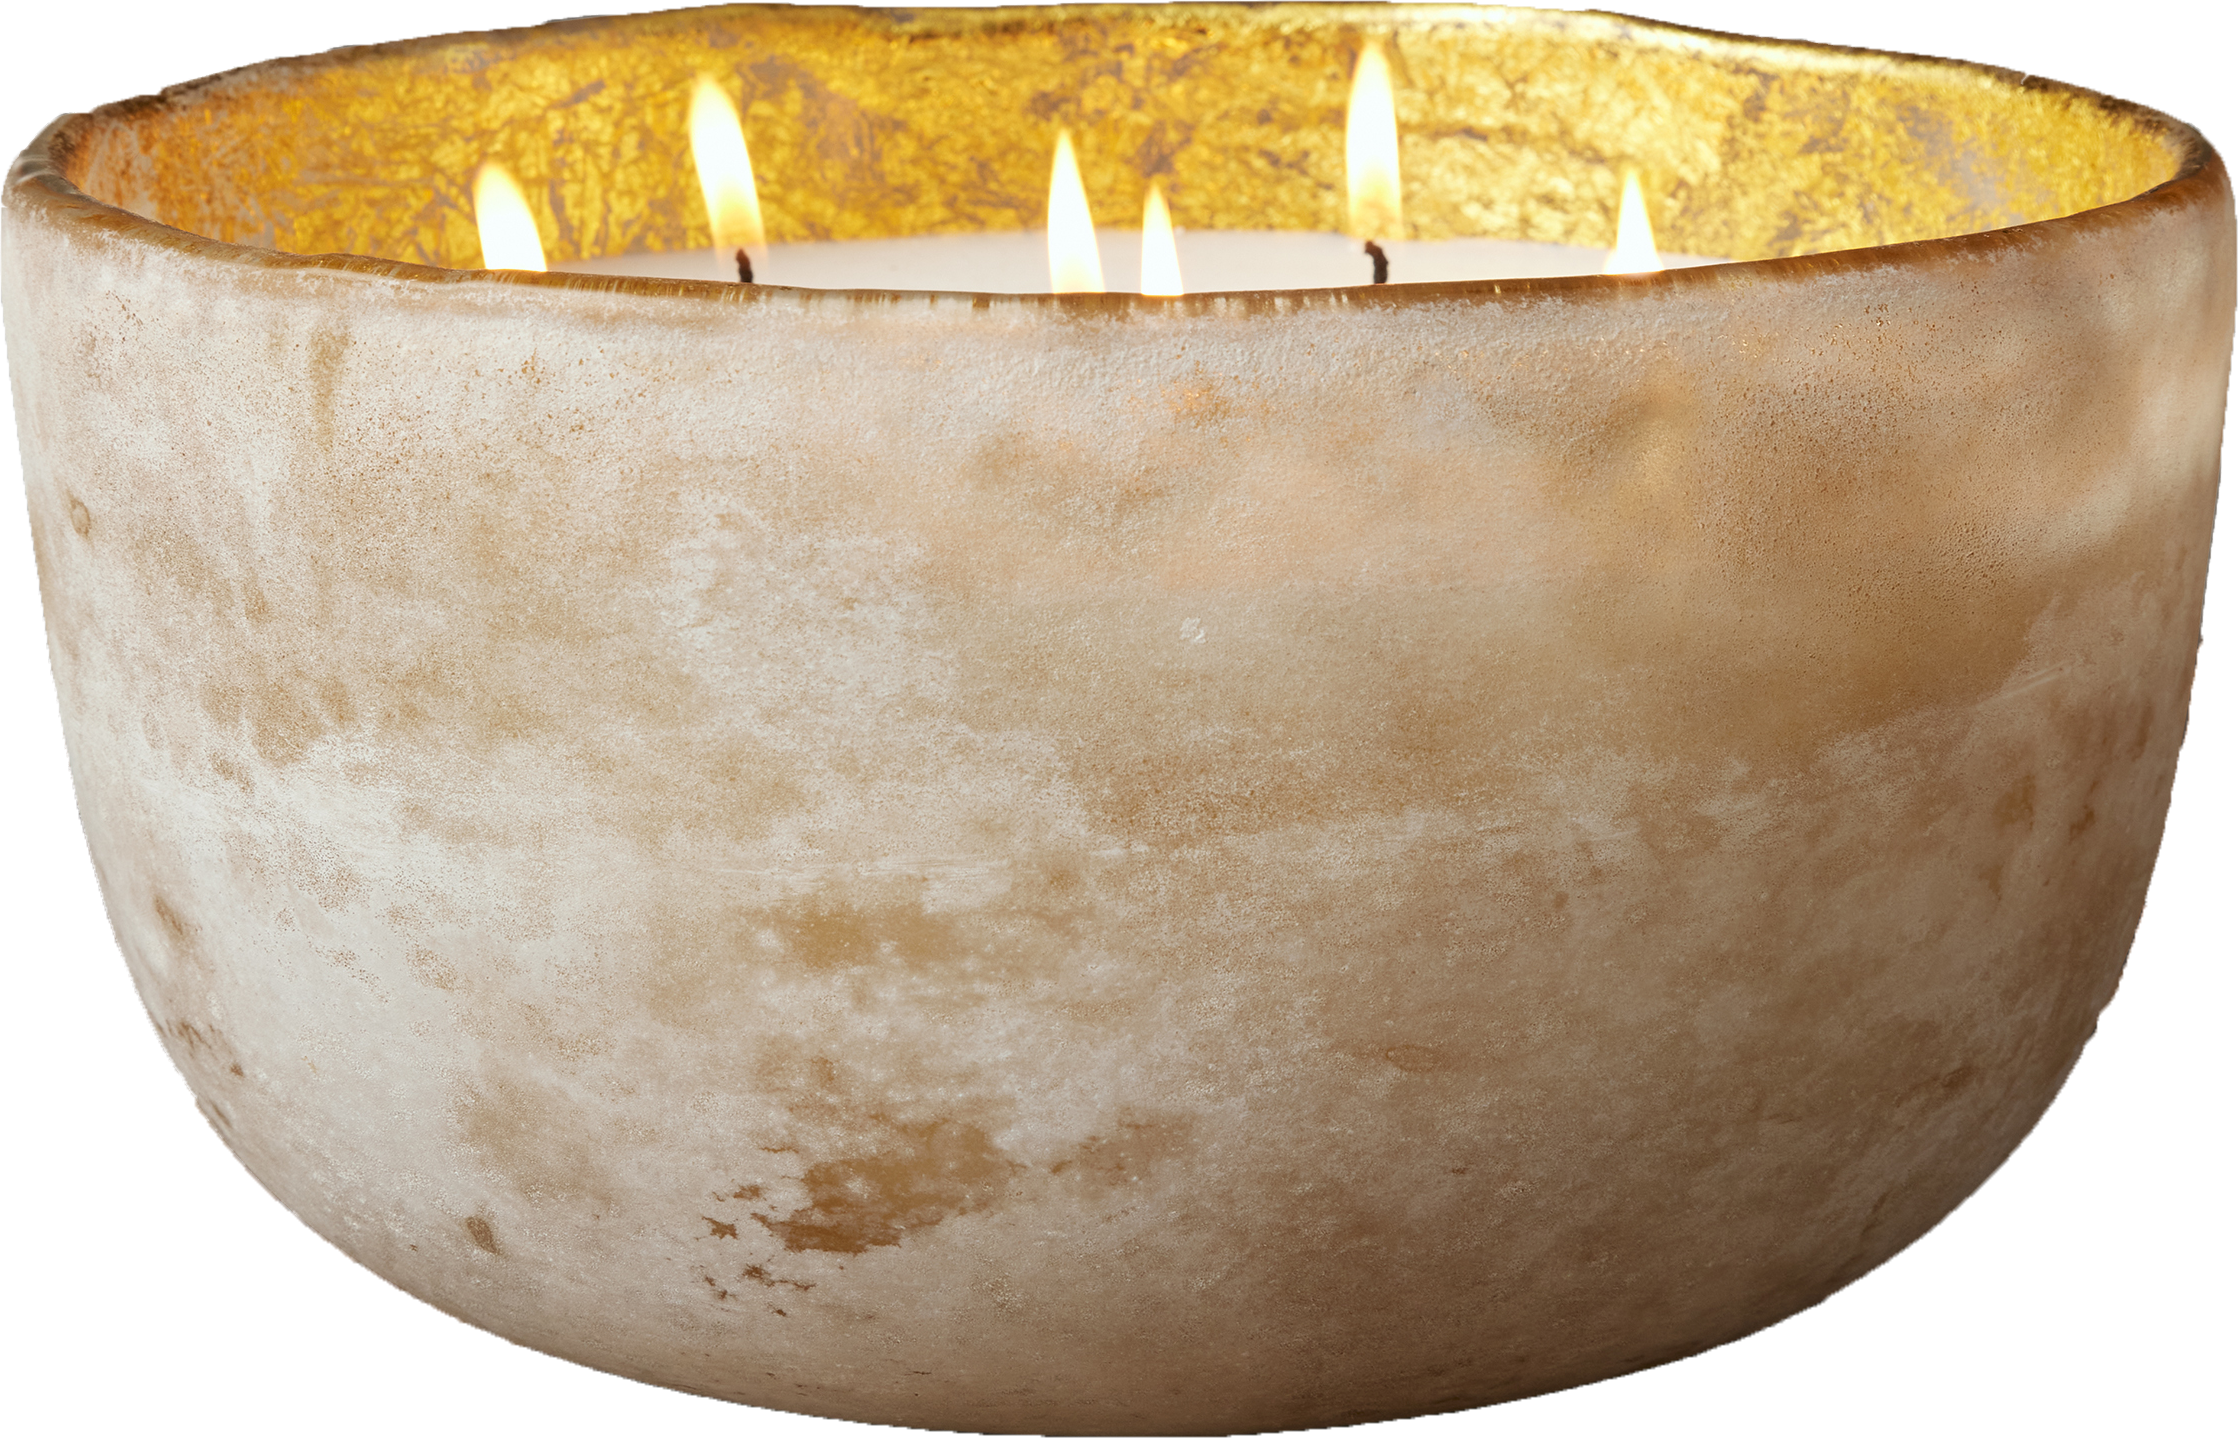   Radiant Myrrh Bowl Candle  